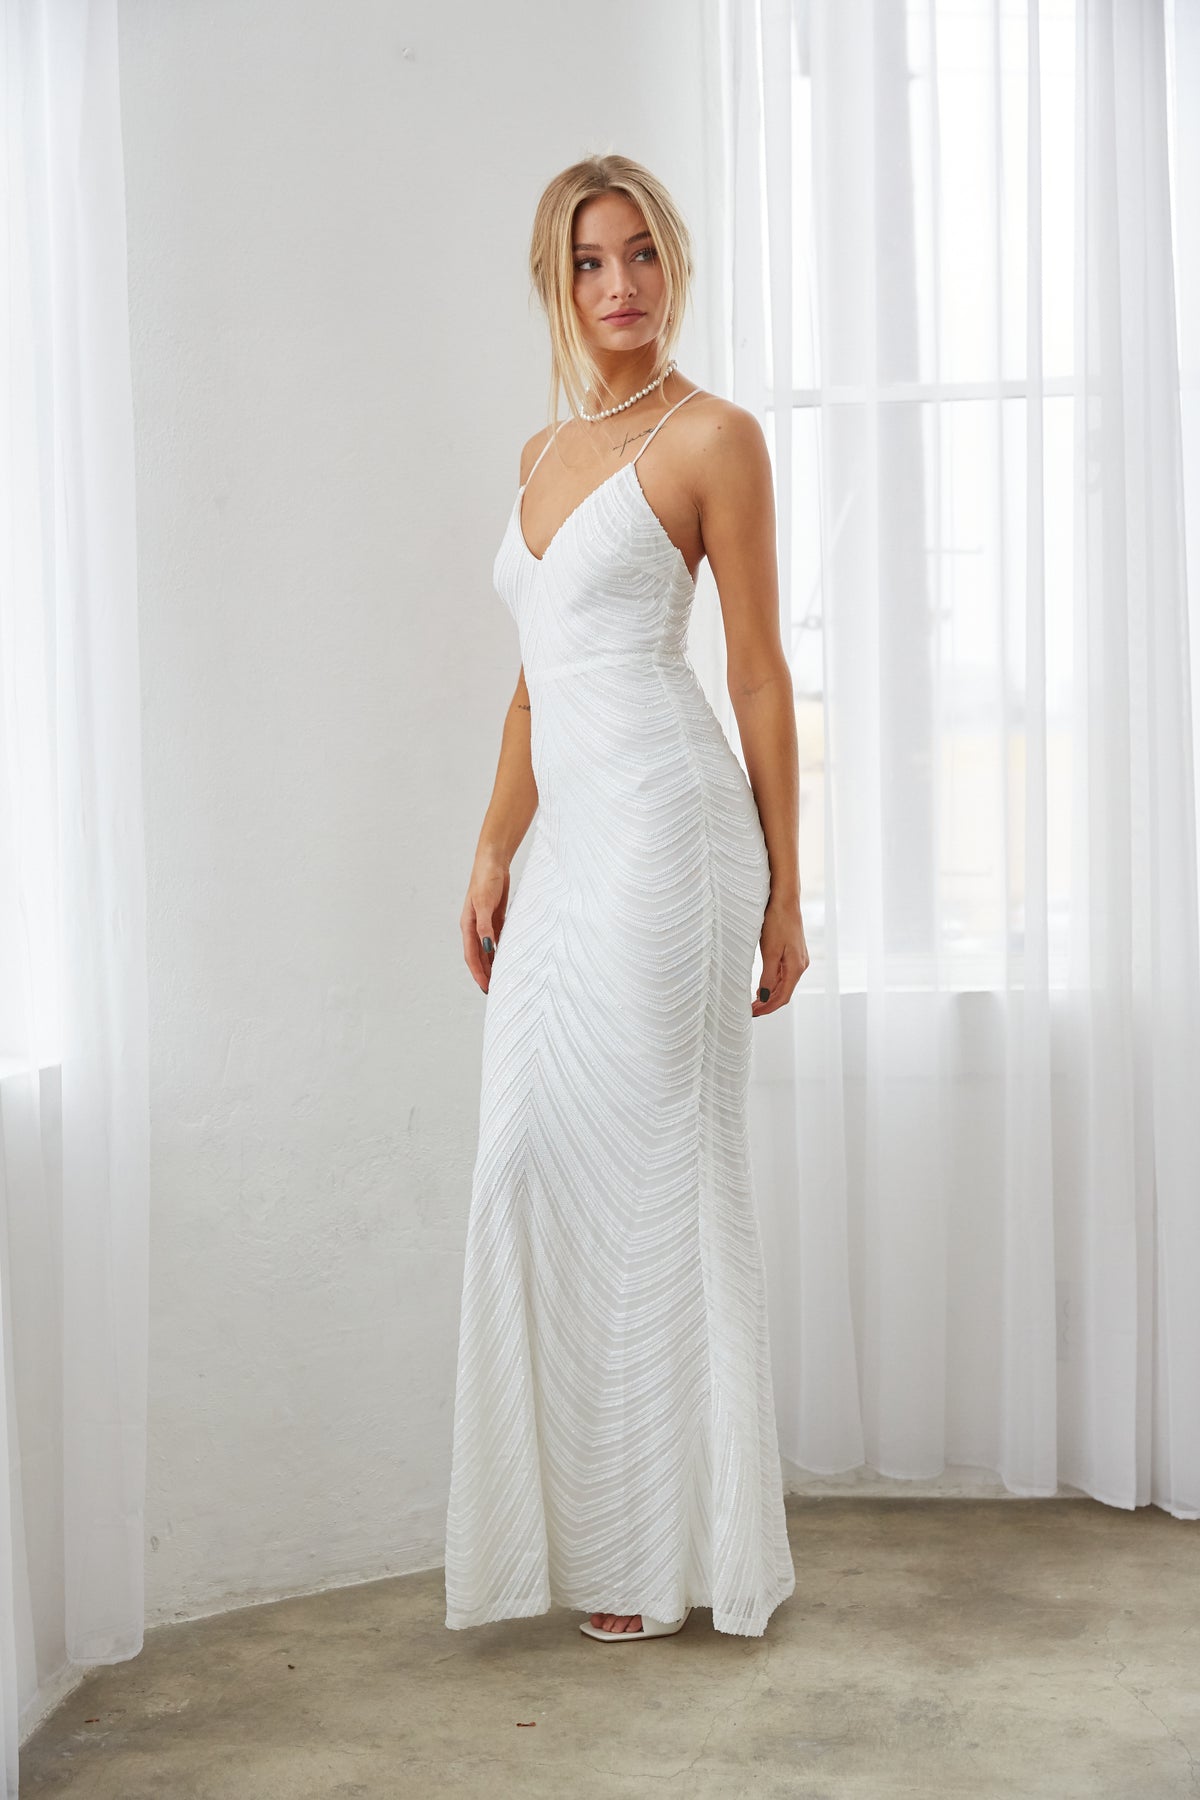 white sequin maxi dress - long white wedding dress - mermaid style wedding reception dress - bachelorette party outfit inspo - elegant bridal shower outfit